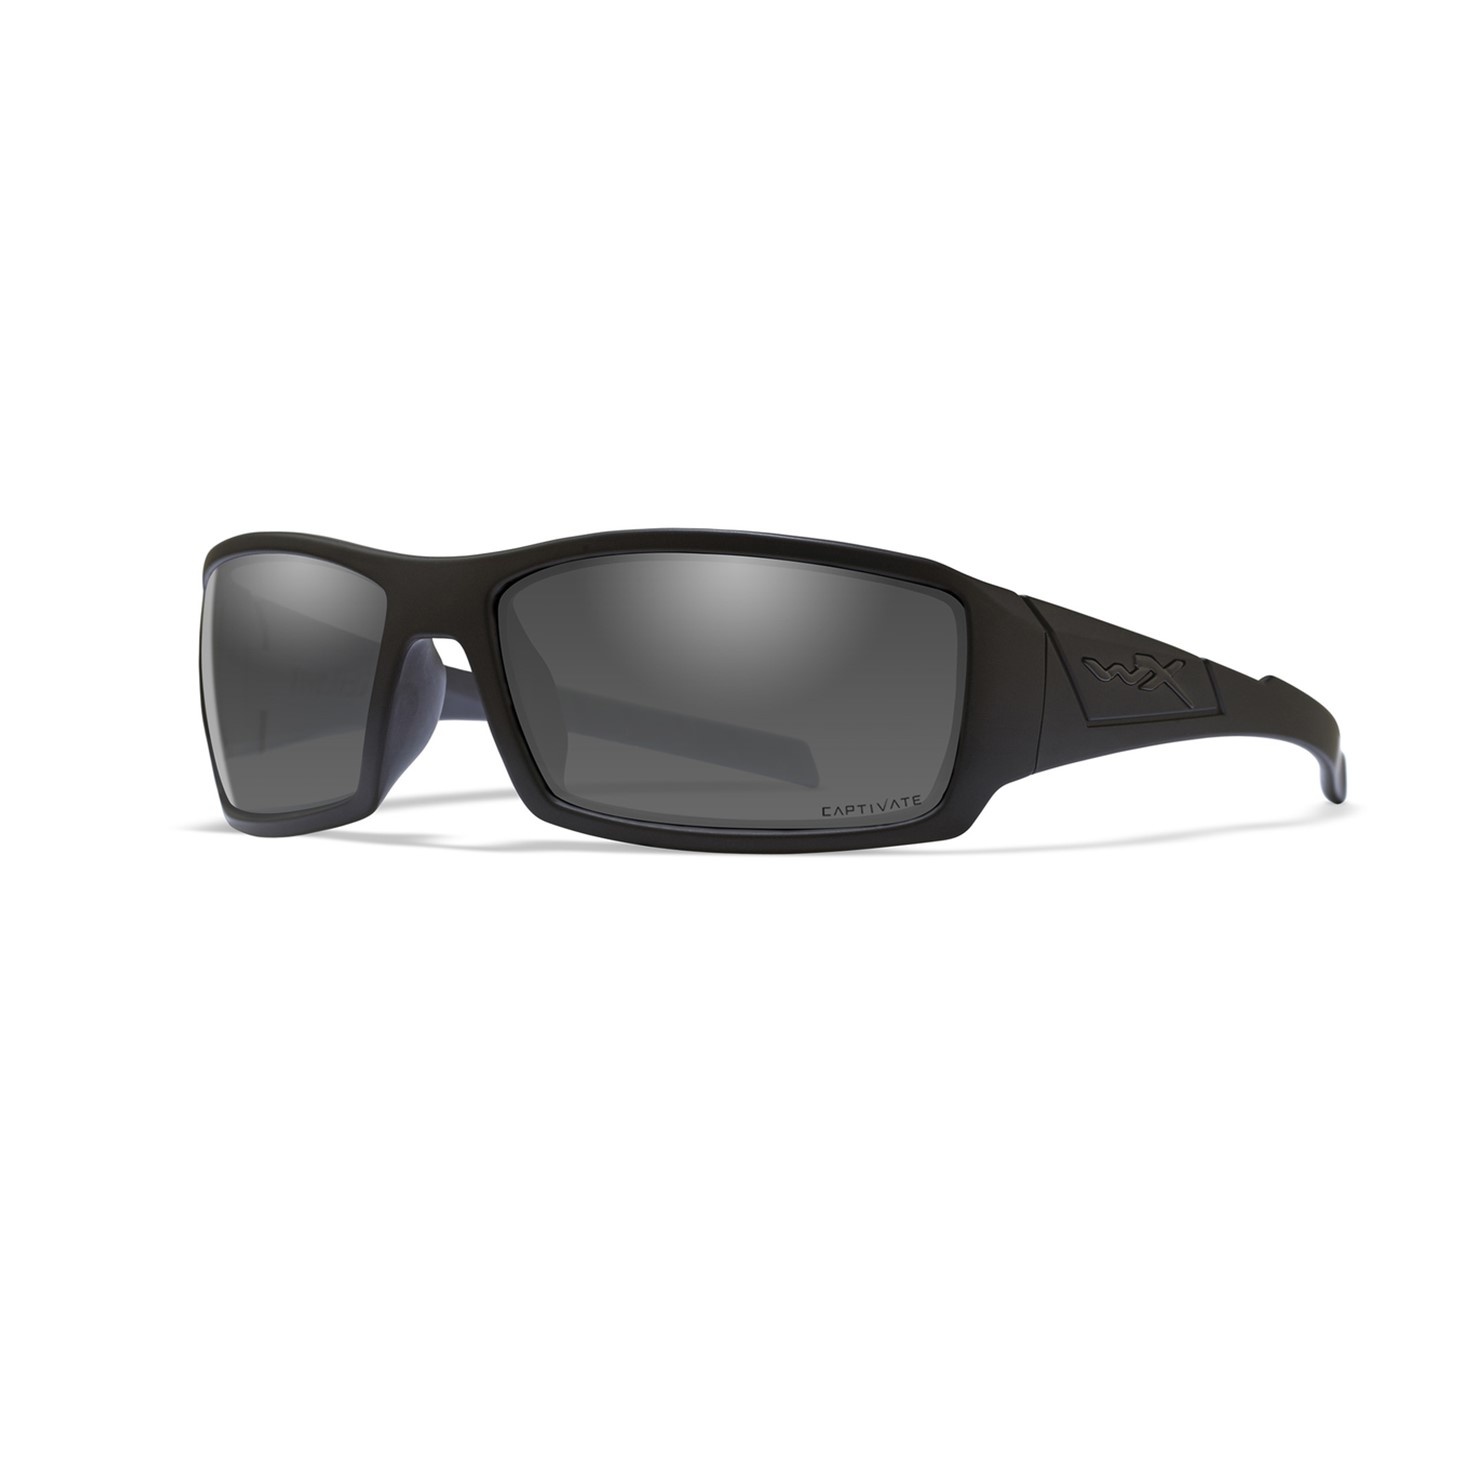 Wiley X Twisted Alt Sunglasses  Matte Black | Captivate Polarized Grey Lens